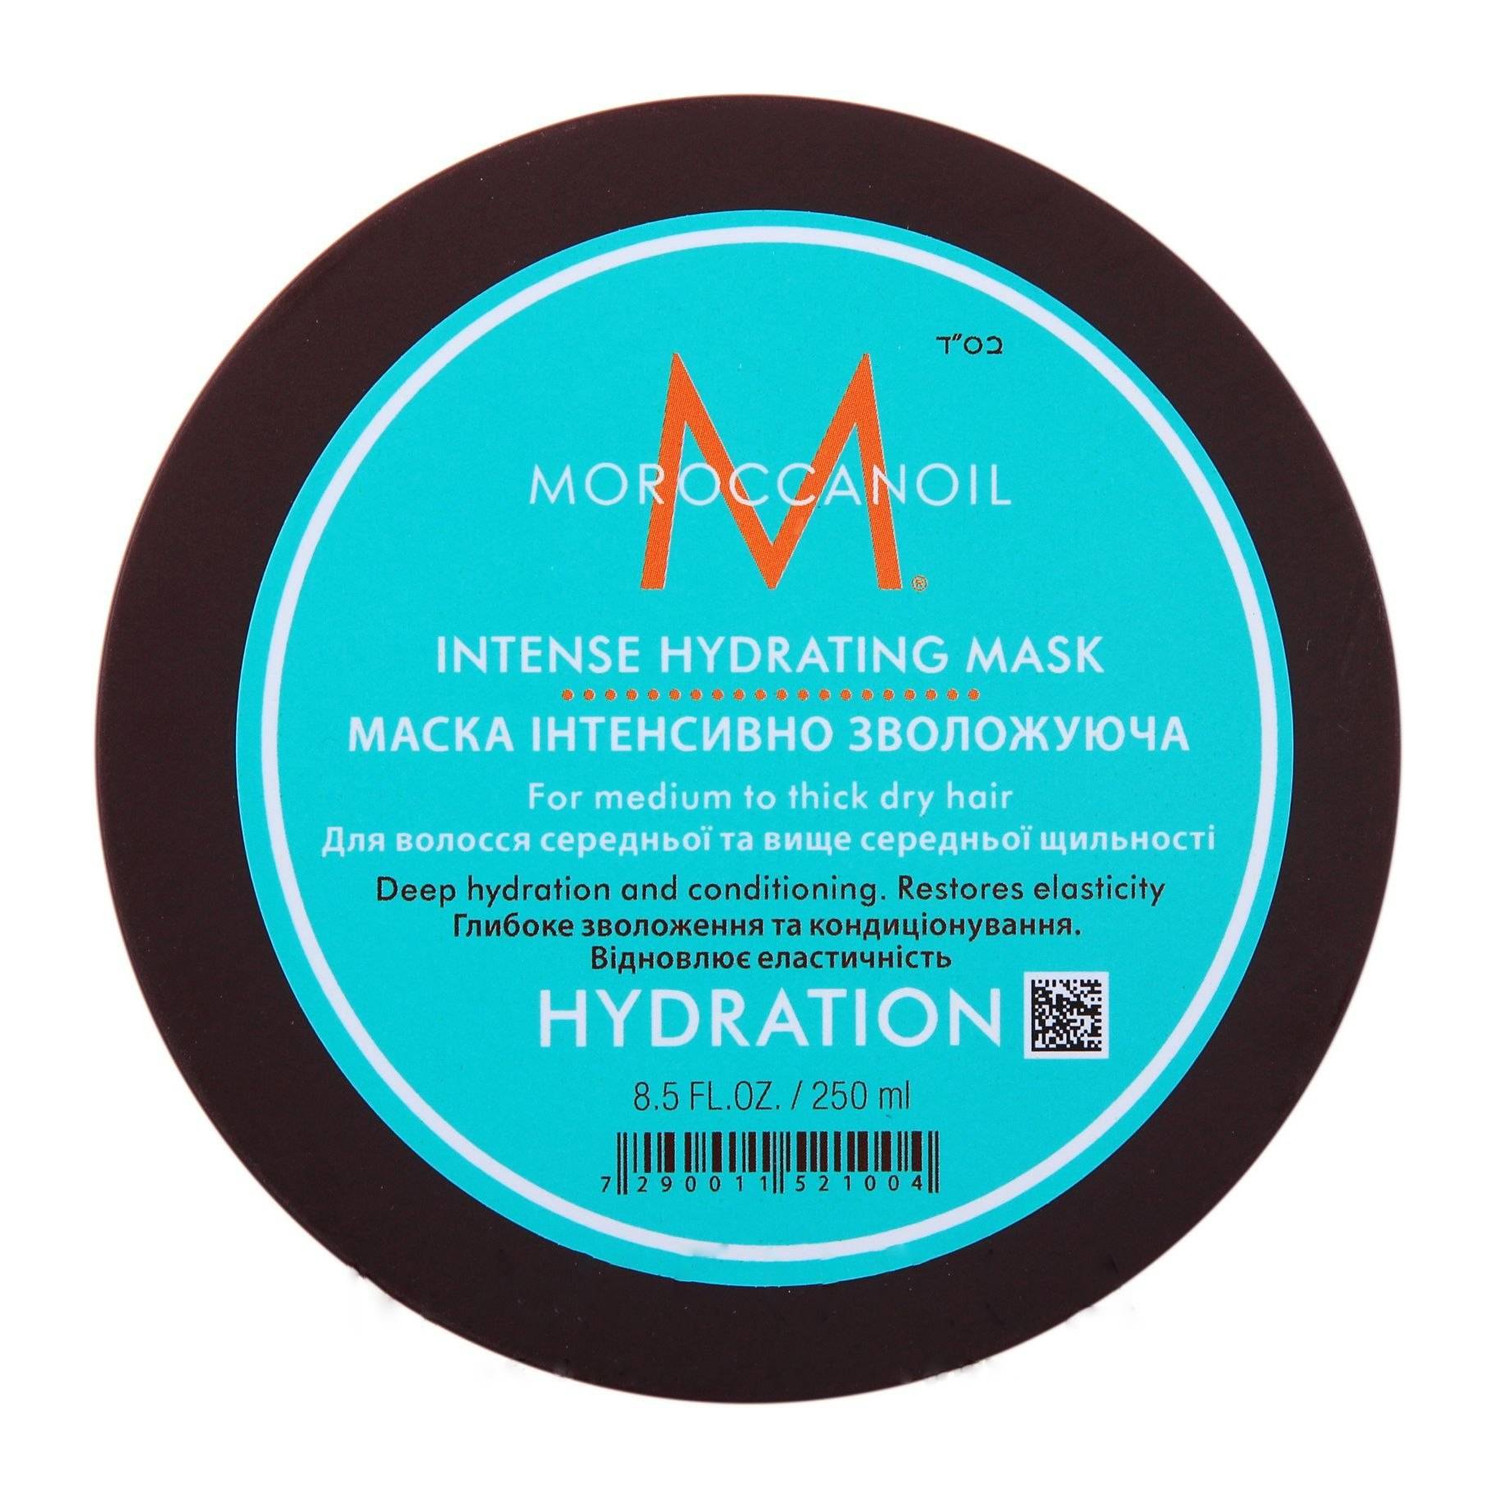 Відгуки про Moroccanoil Intense Hydrating Mask Интенсивная увлажняющая маска